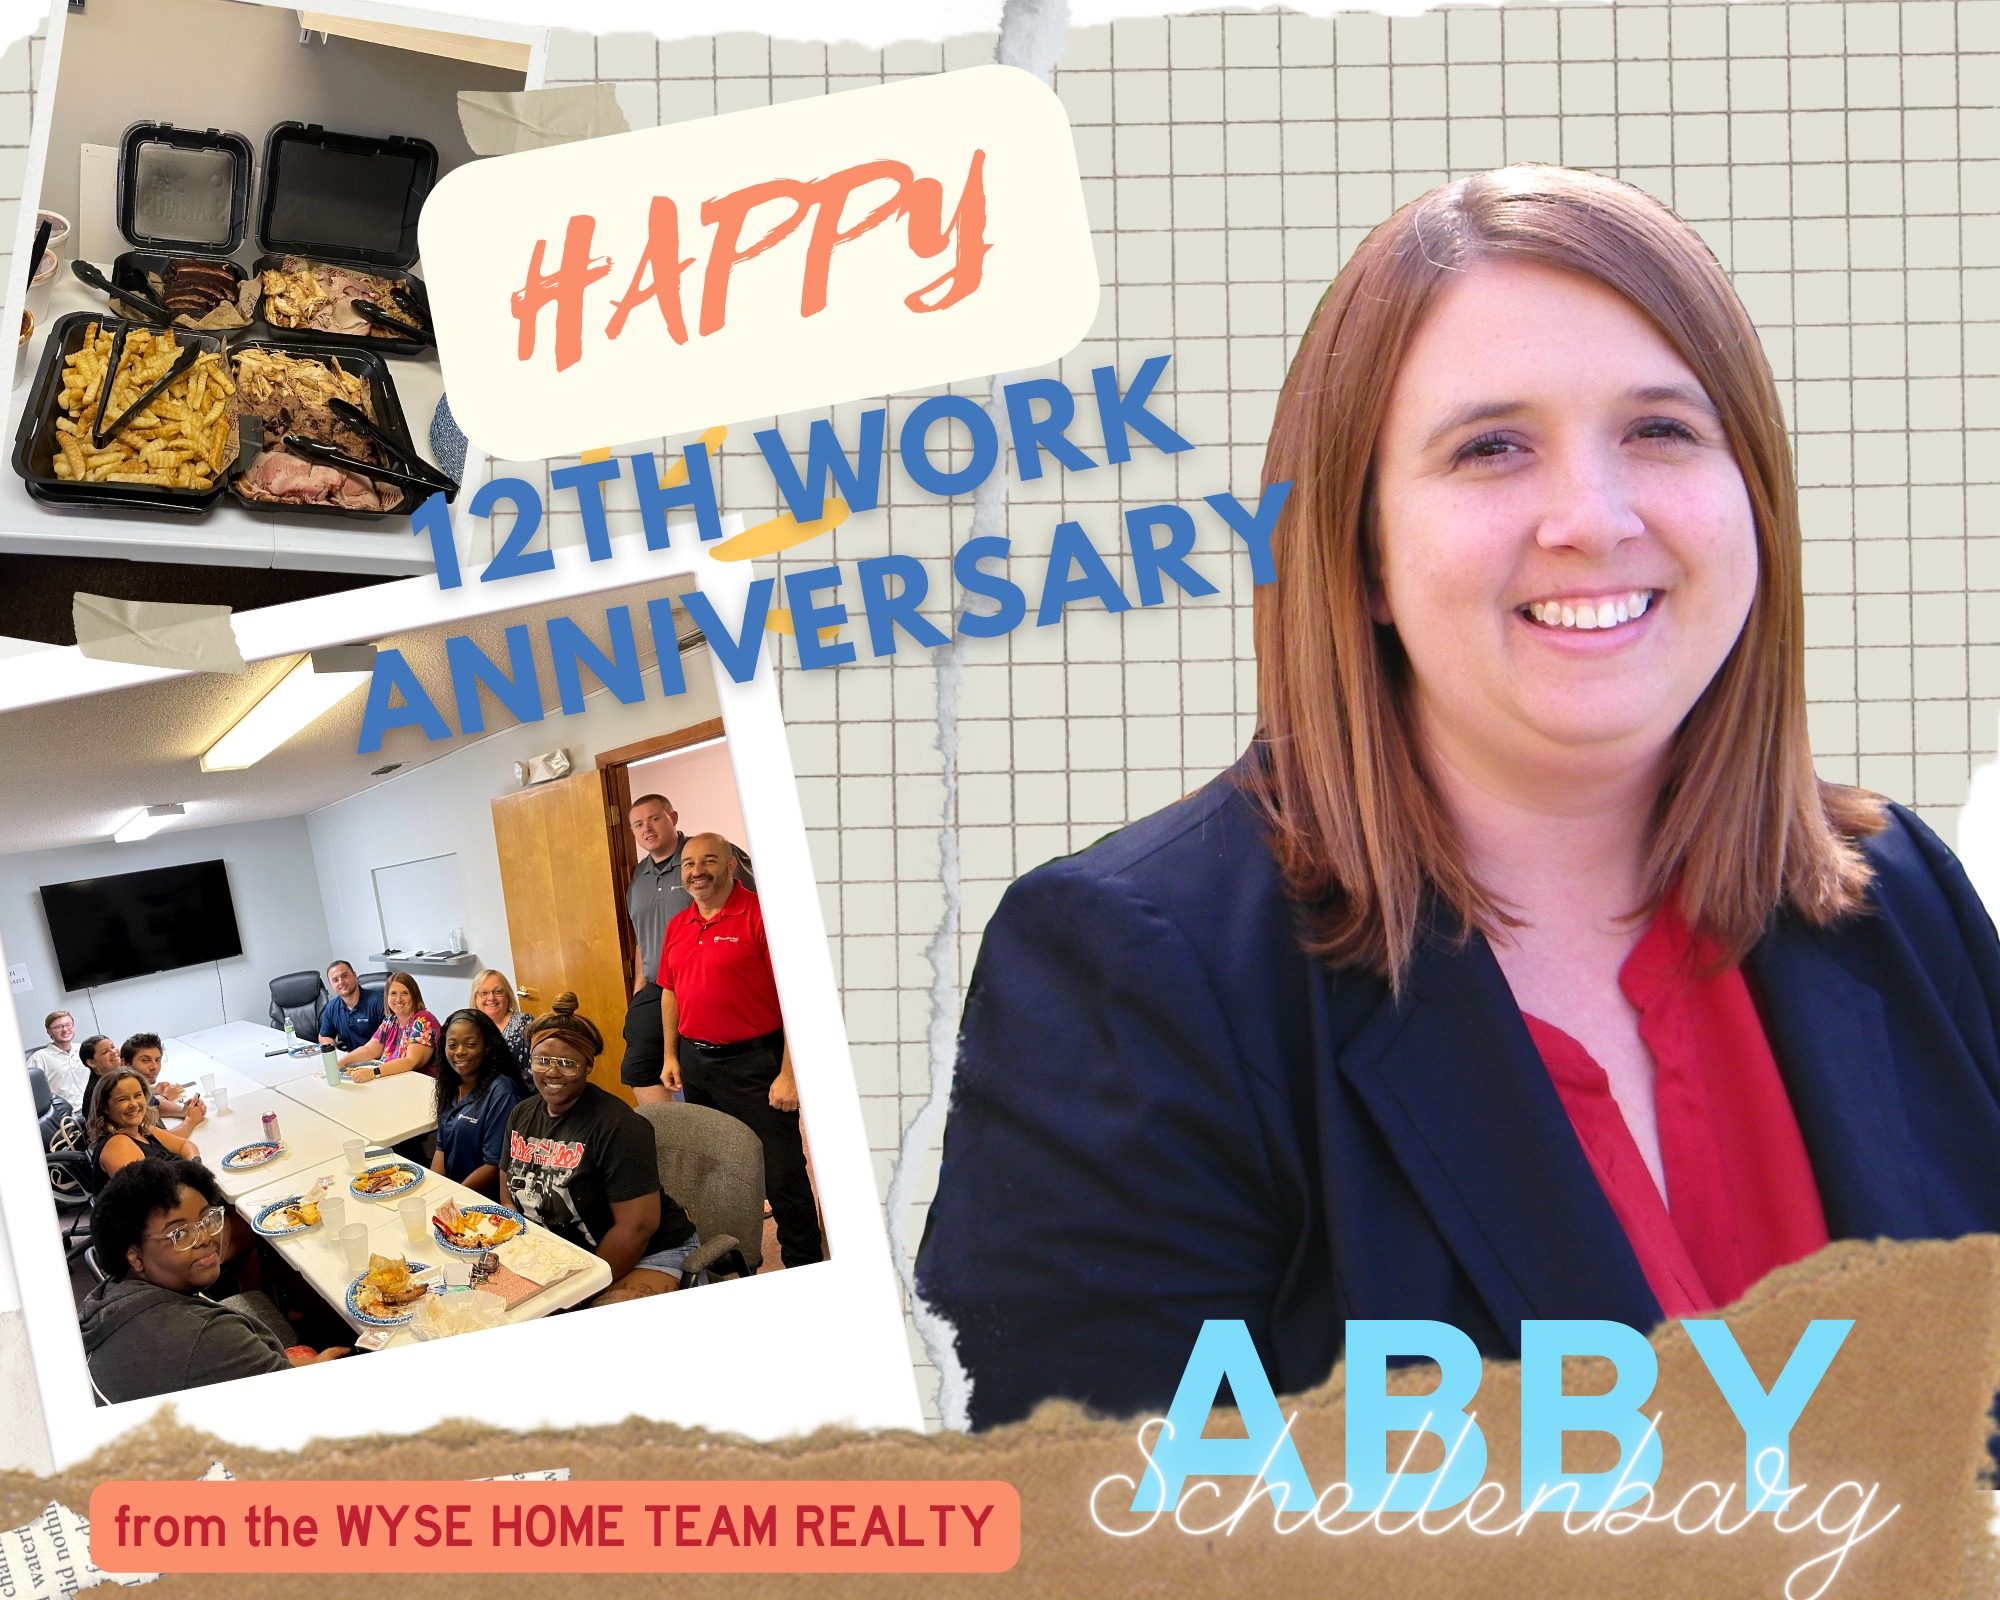 Abby Schellenbarg's 12 year anniversary 